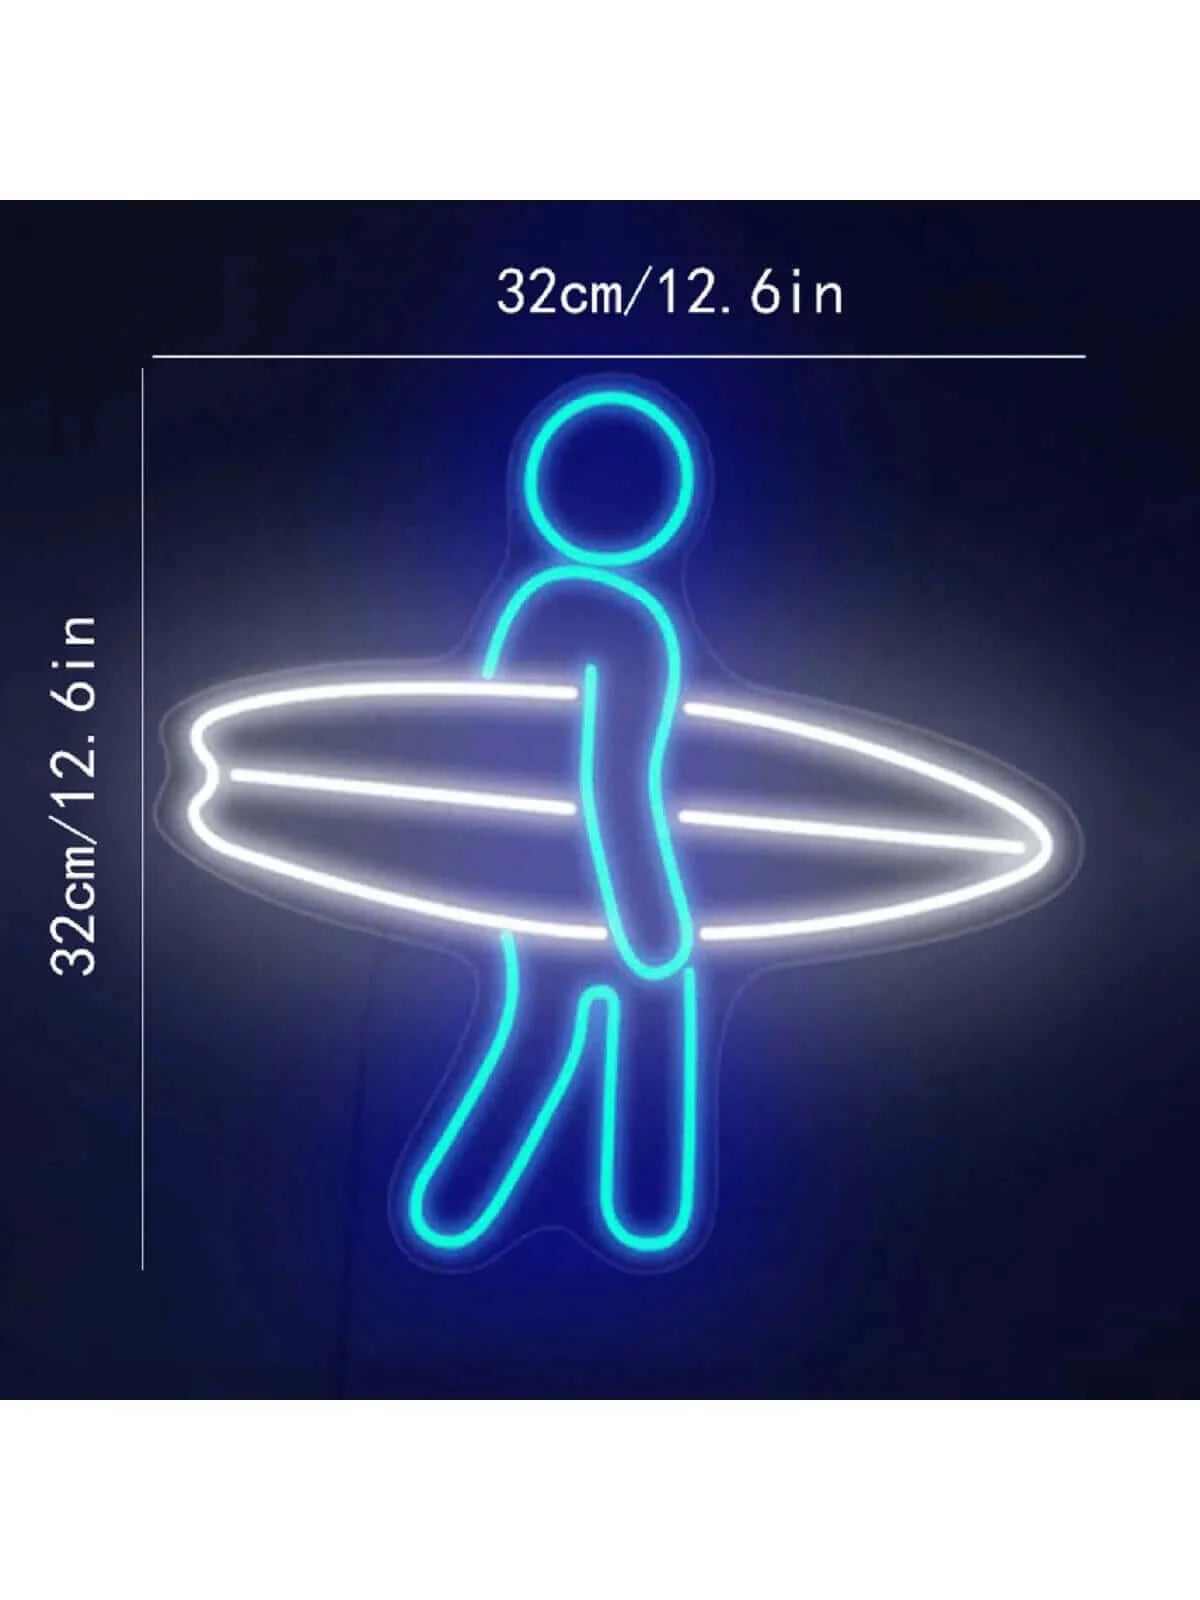 Surfer Dude Neon Sign